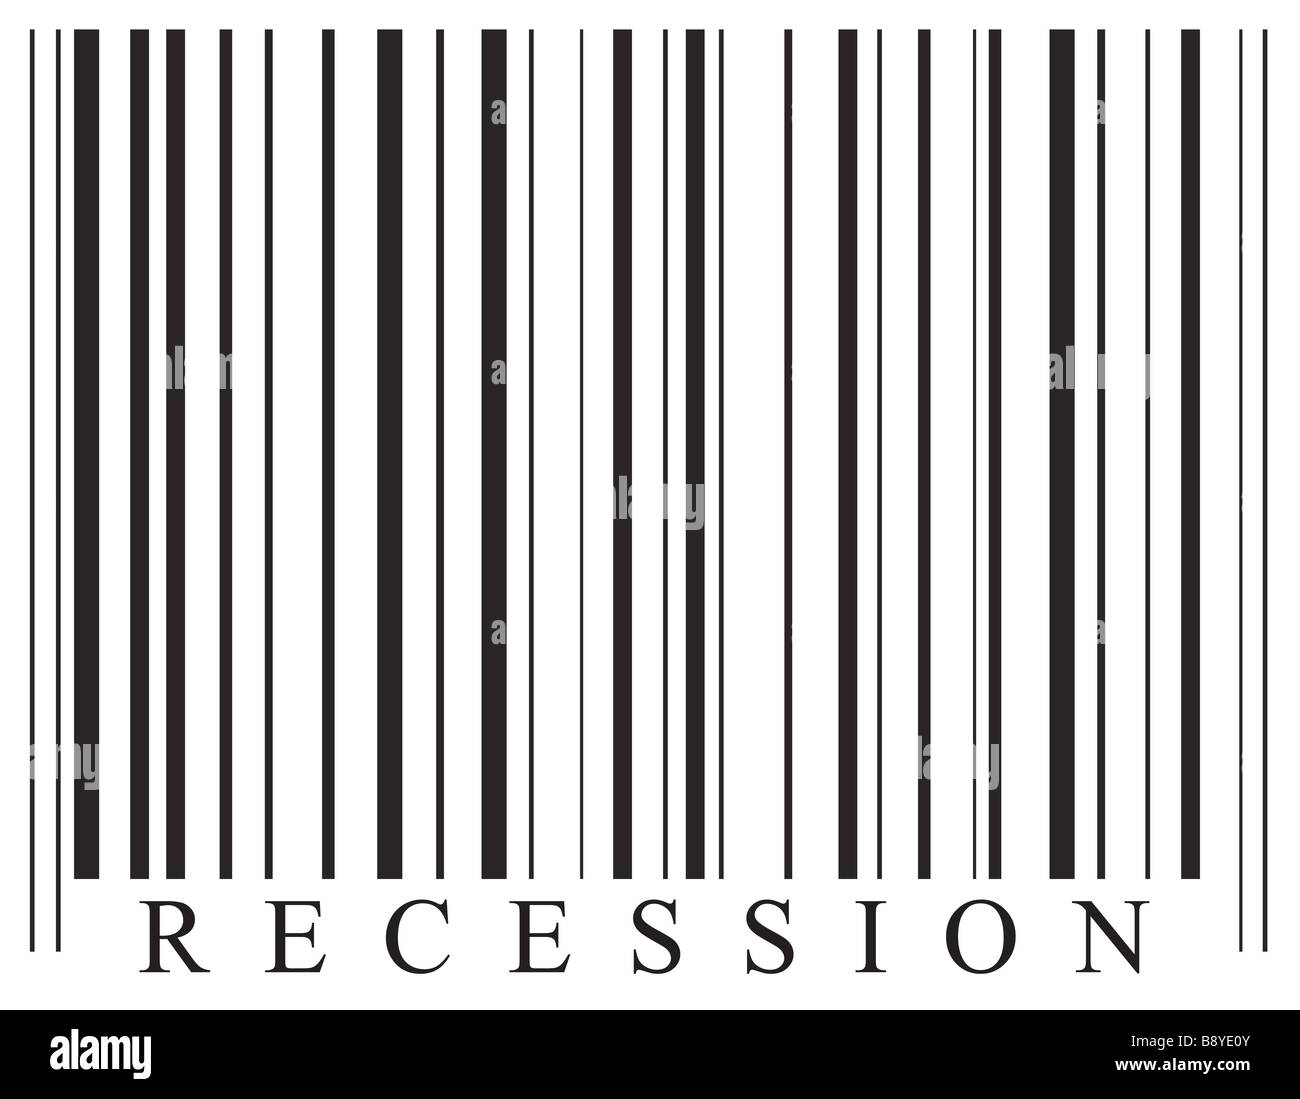 Recession Barcode Stock Photo